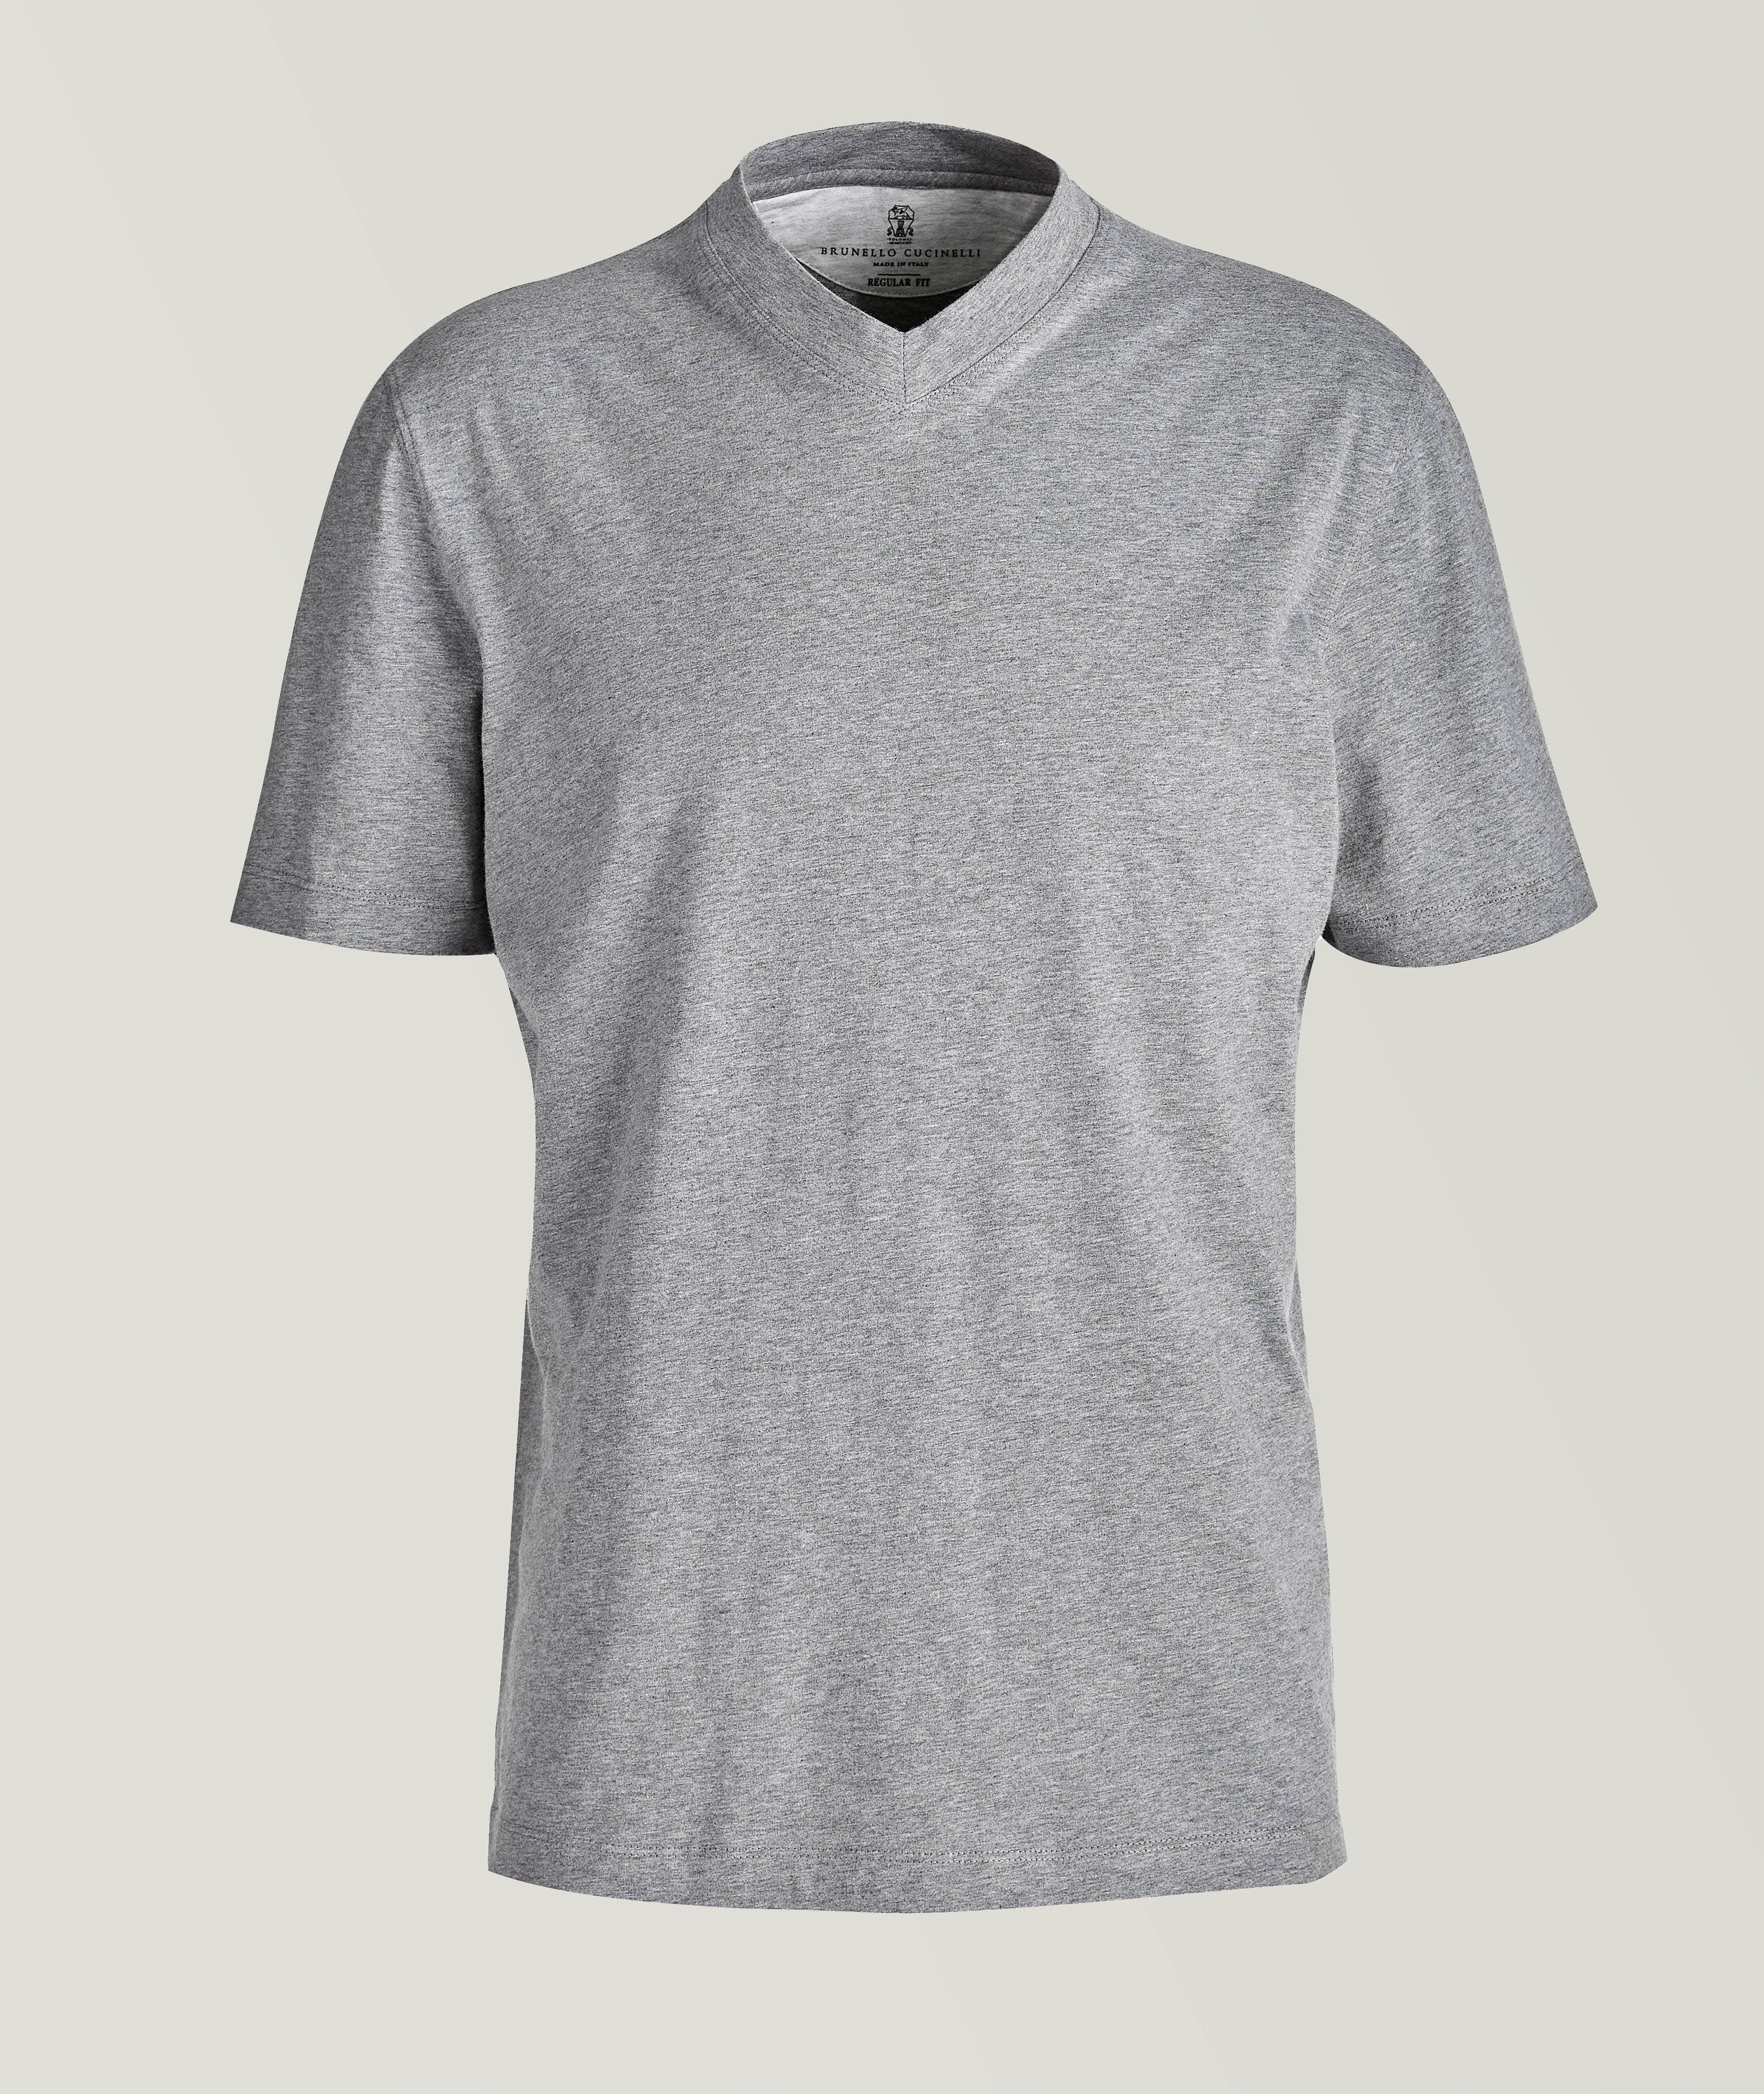 Cotton V-Neck T-Shirt  image 0